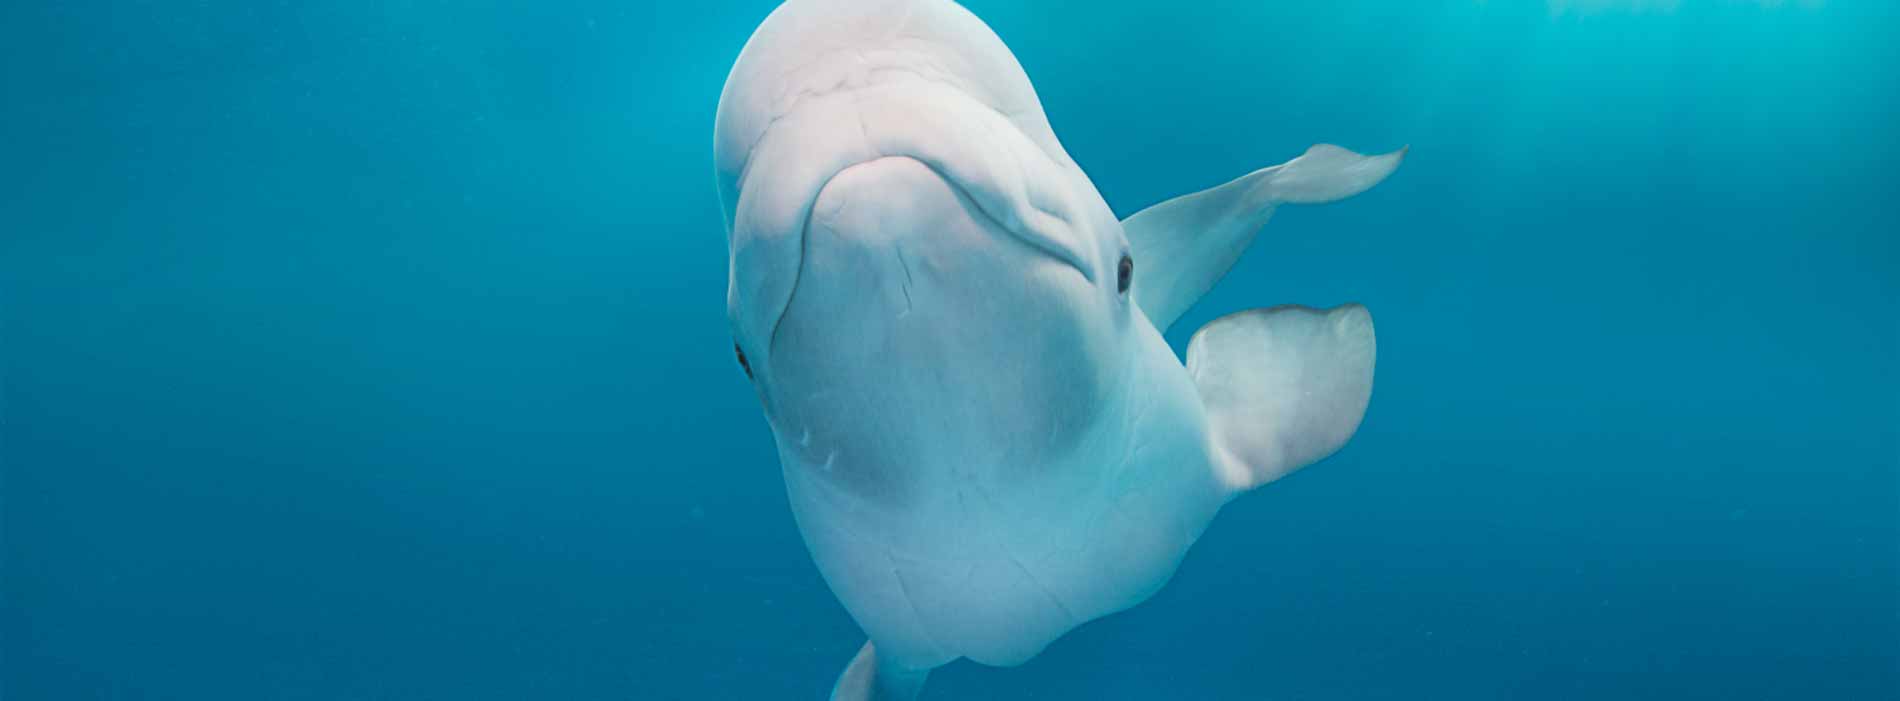 SeaWorld guests meet a beluga whale